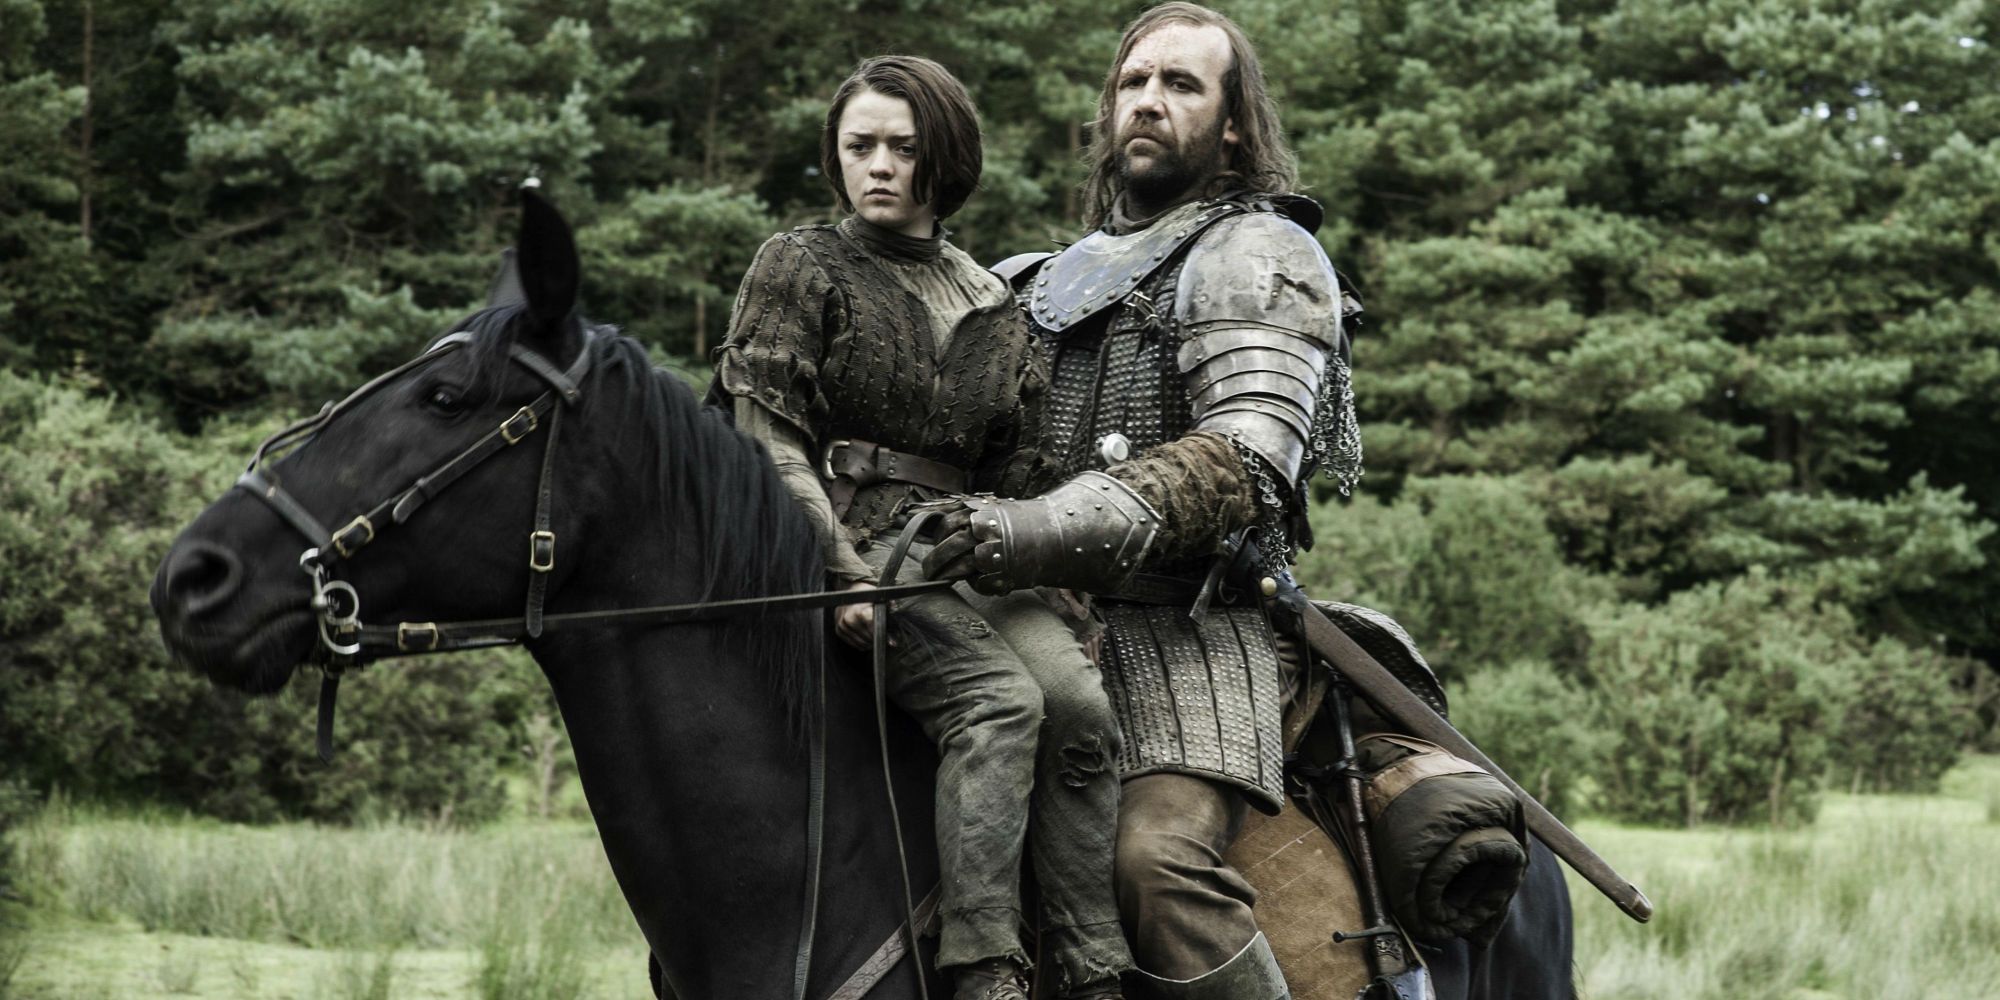 Game of Thrones - Hound and Arya